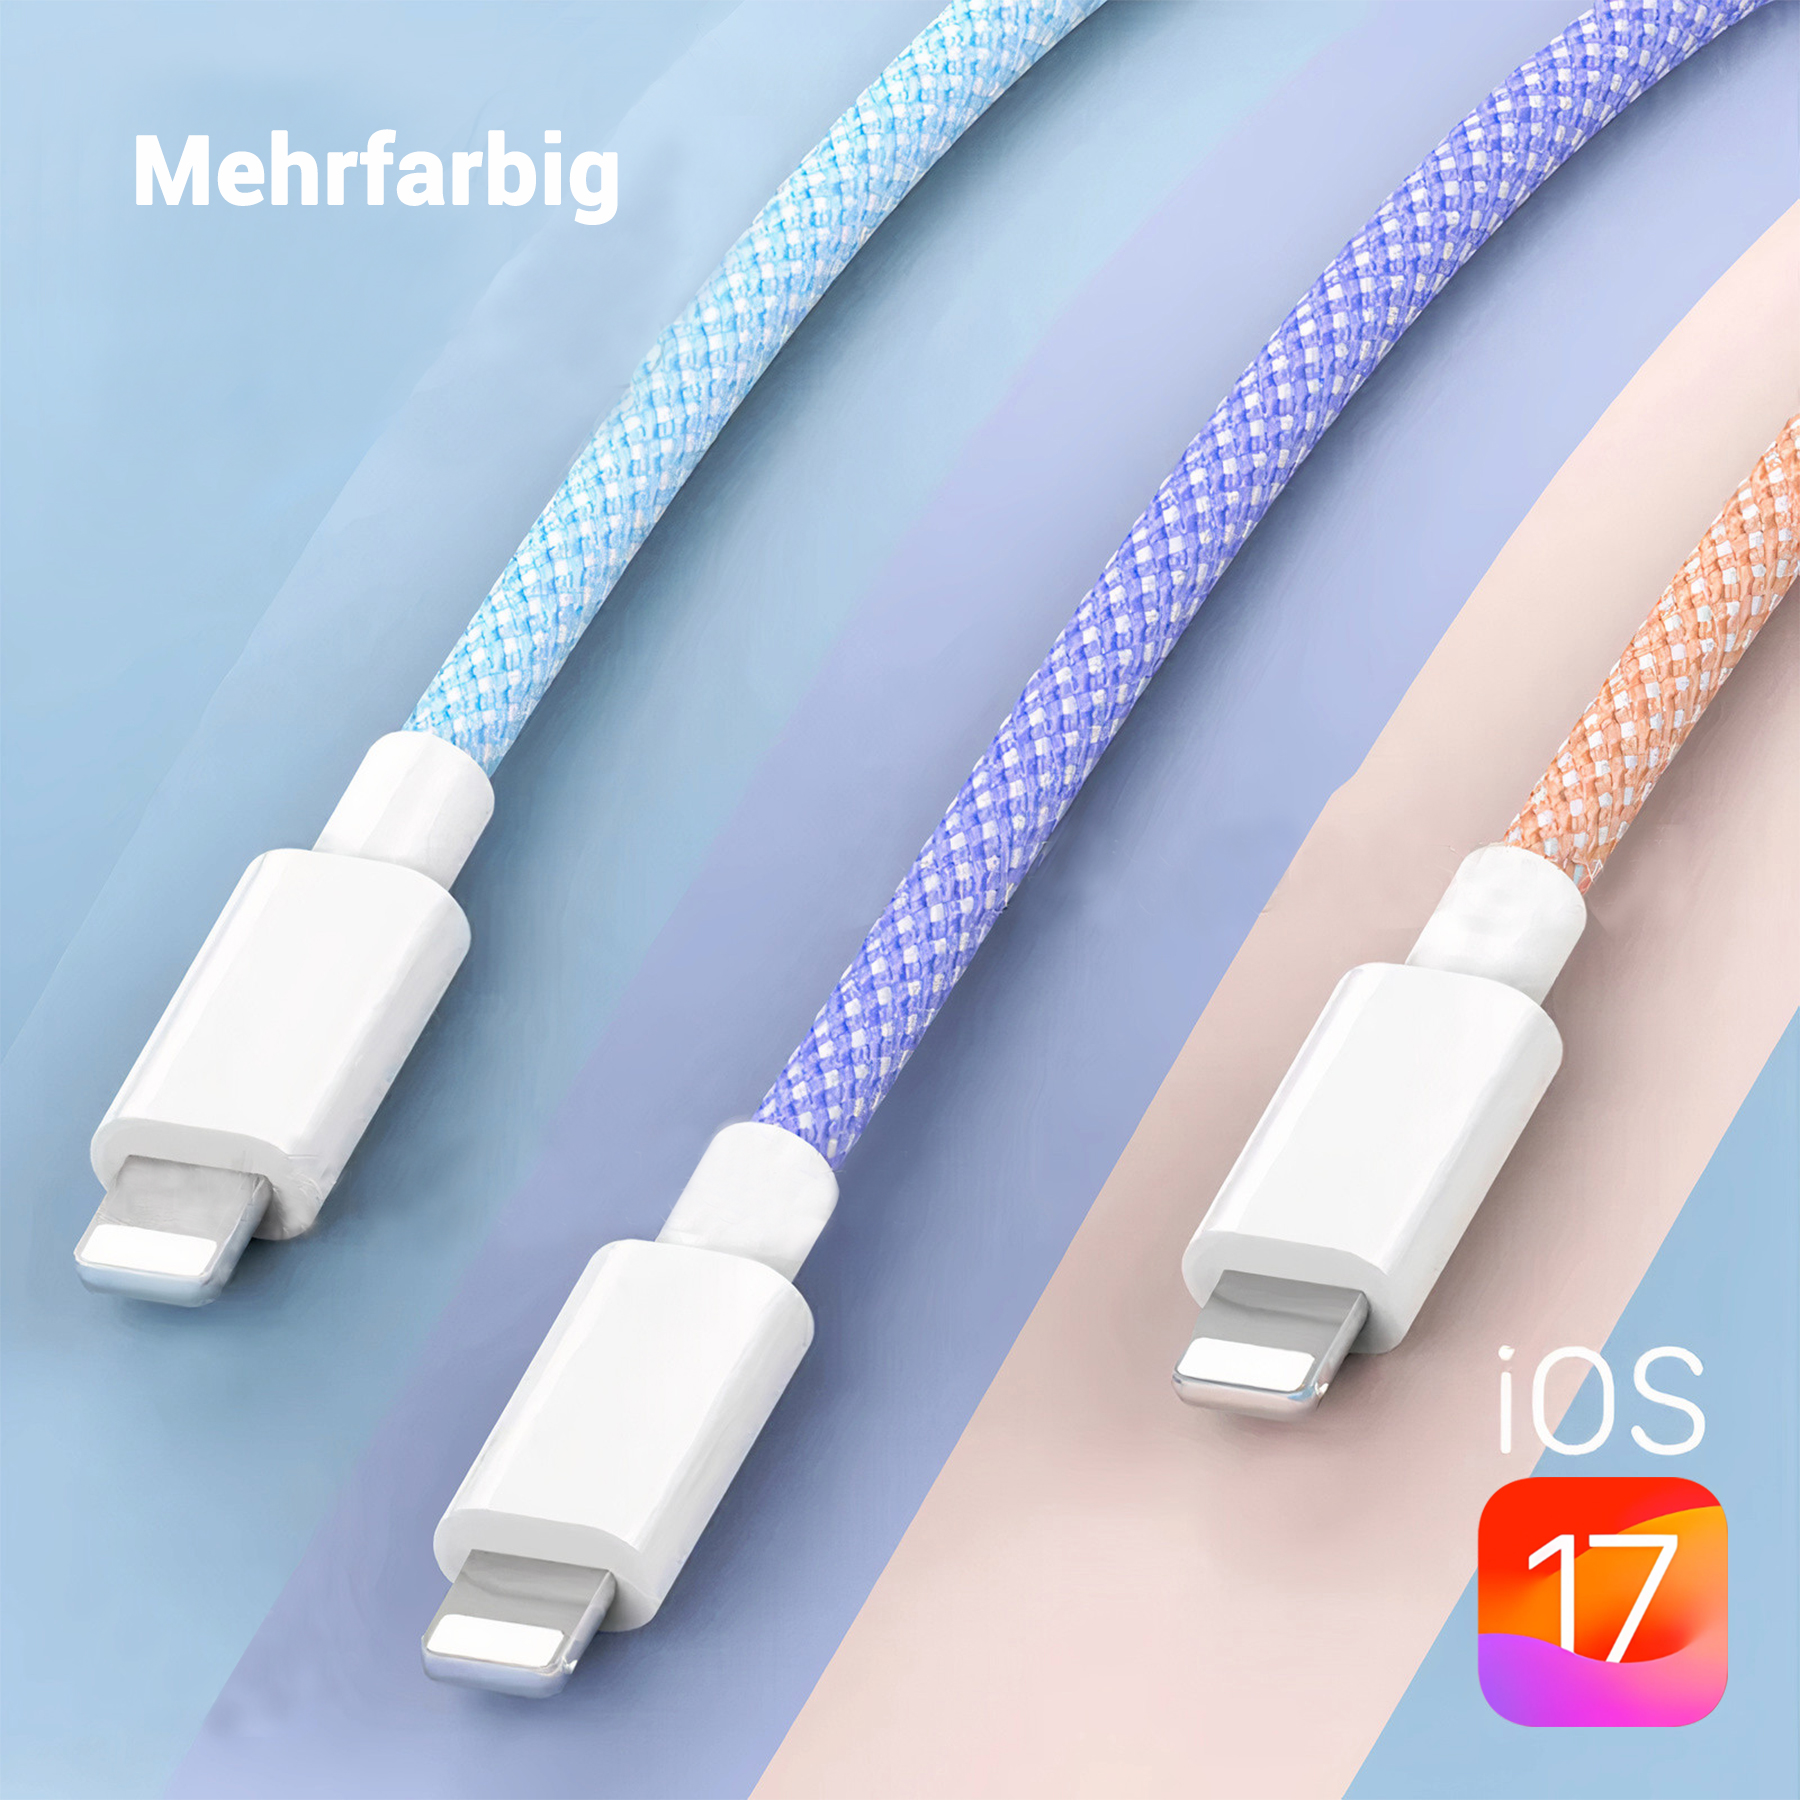 Datenkabel XTREMES USB-C iphone Datenkabel, Kabel, Lightning und 2 ladekabel Apple zu ladekabel m, und Lightning USB-C (Orange), iPhone Orange iphone